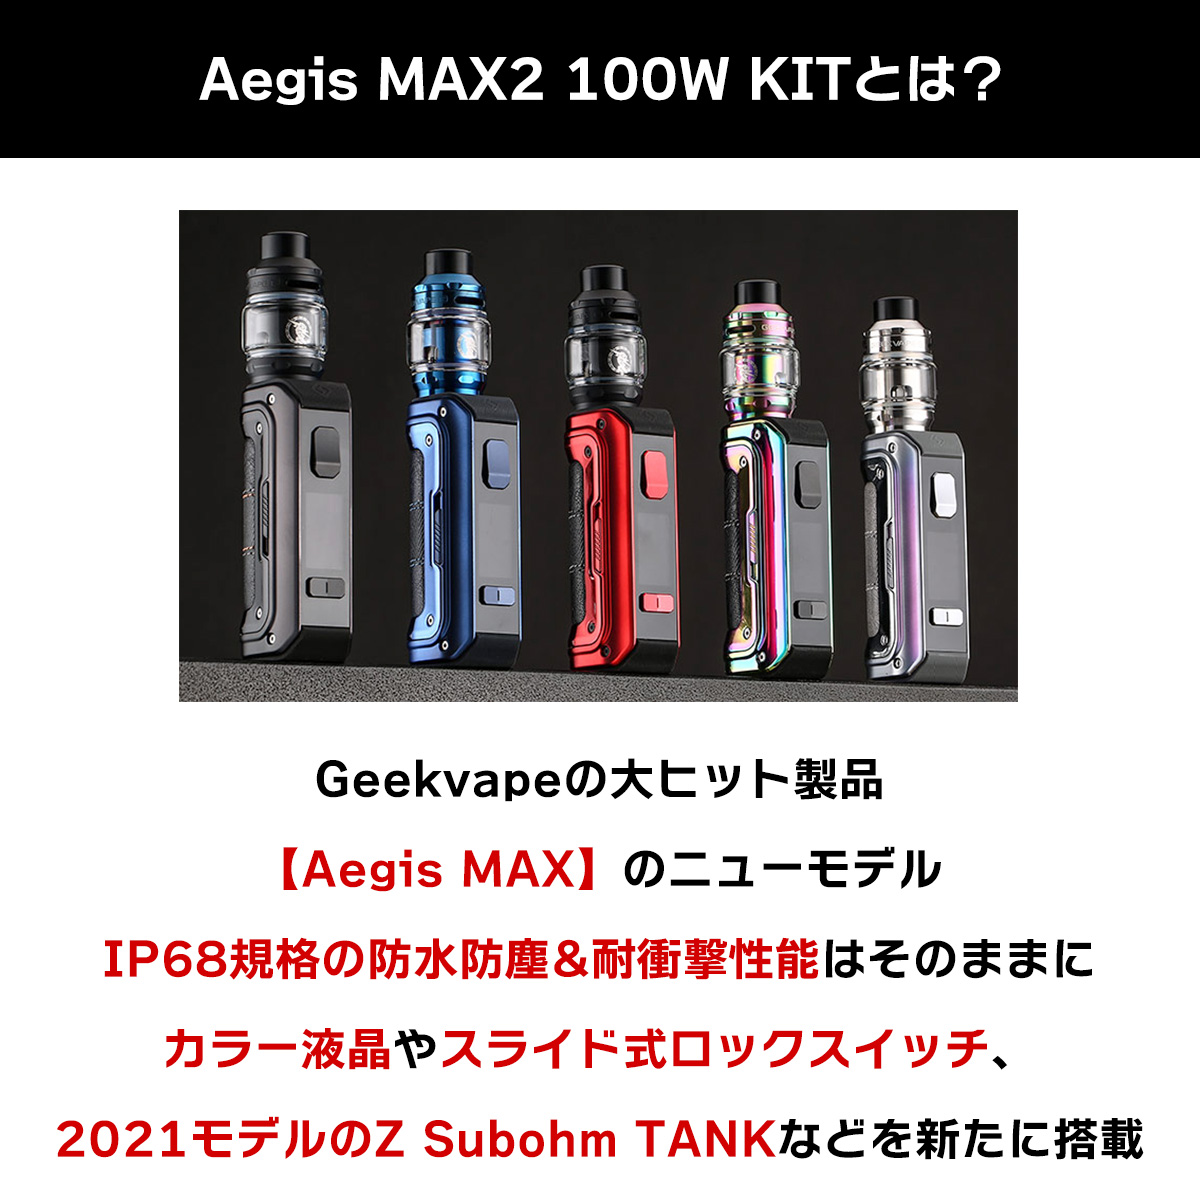 Geekvape Aegis マックス 100W ギークベイプ MAX2 KIT スターター 